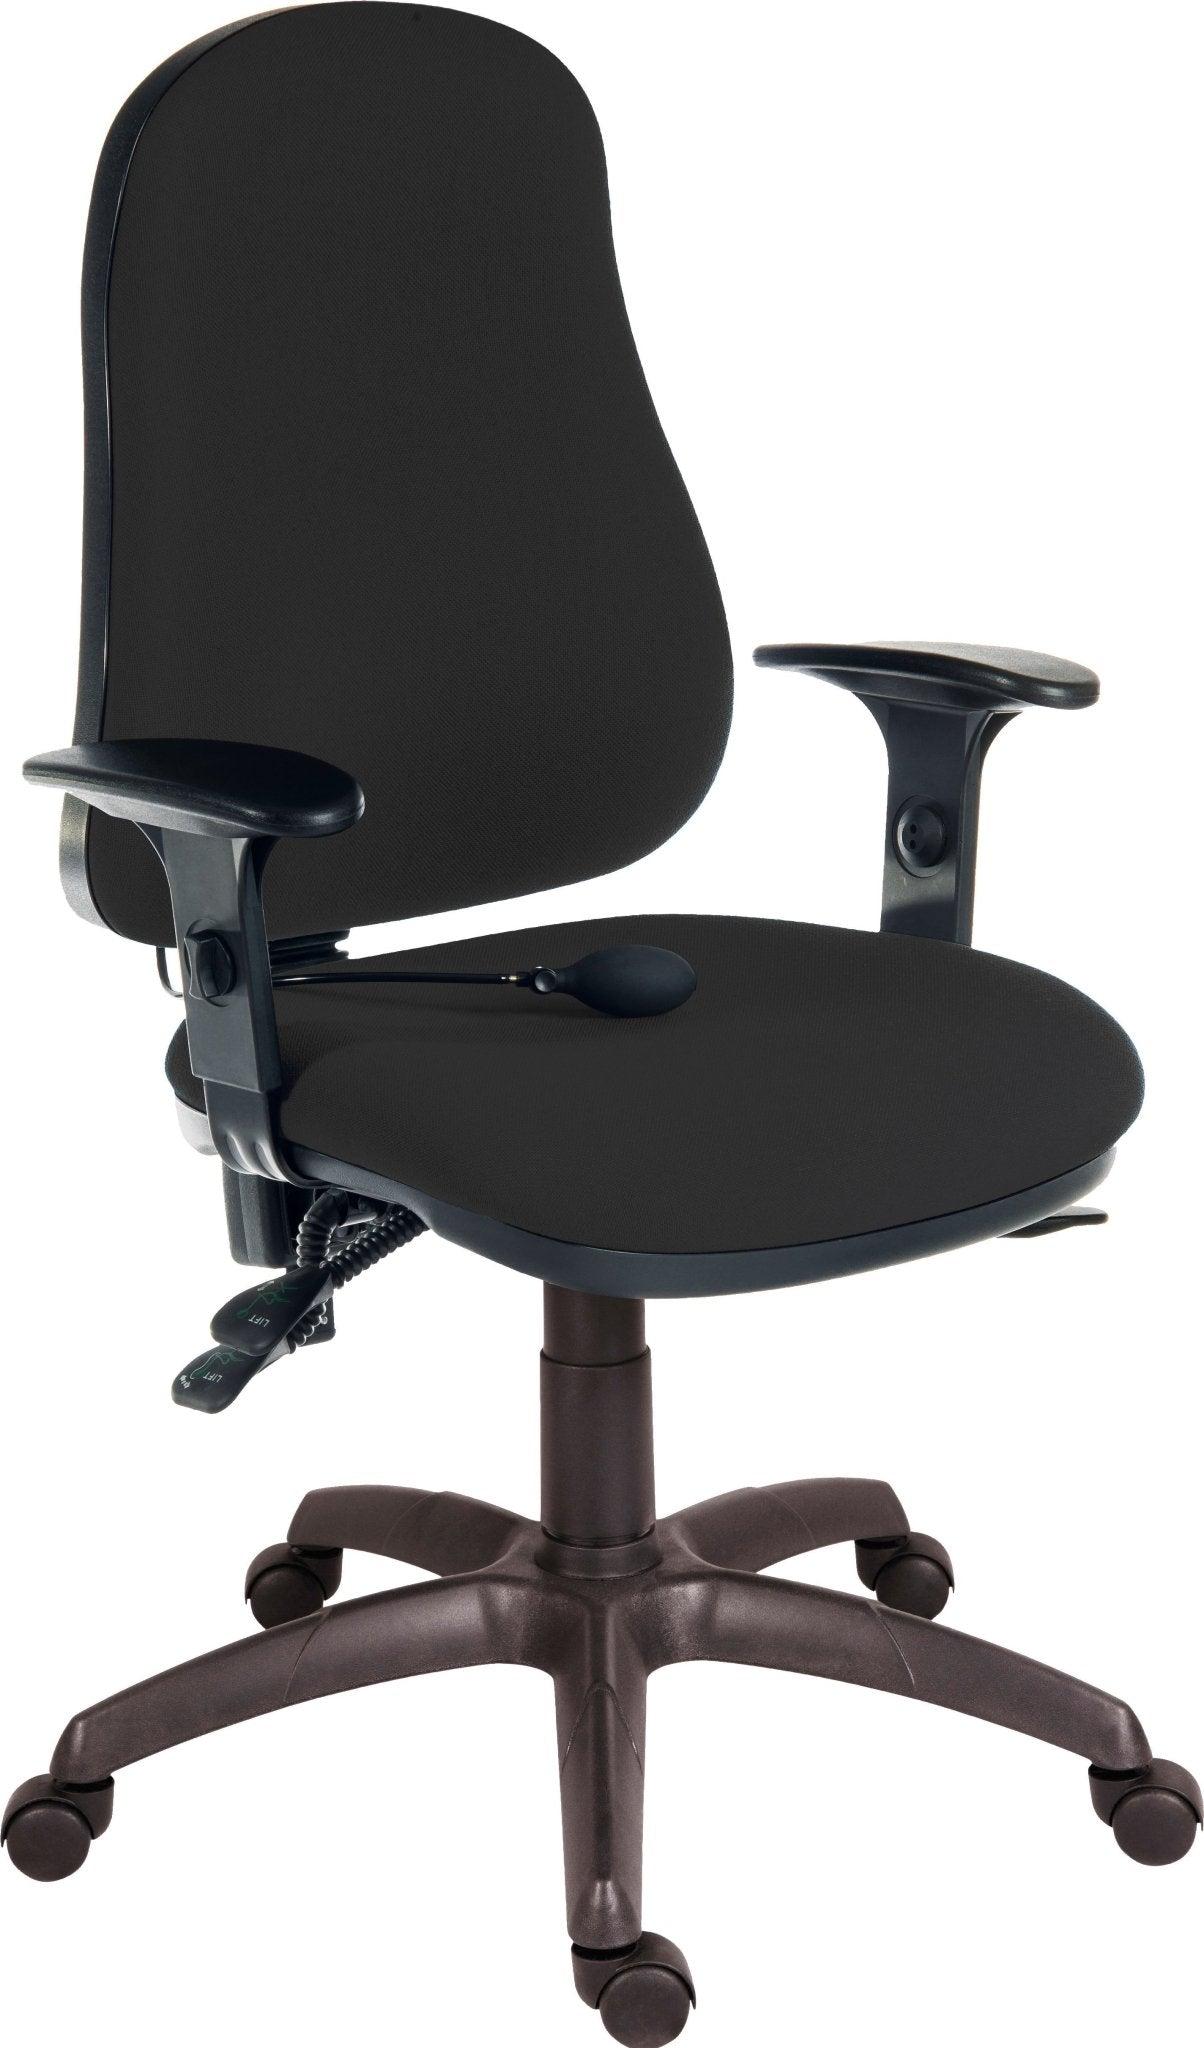 Ergo comfort air office chair (black) - crimblefest furniture - image 1